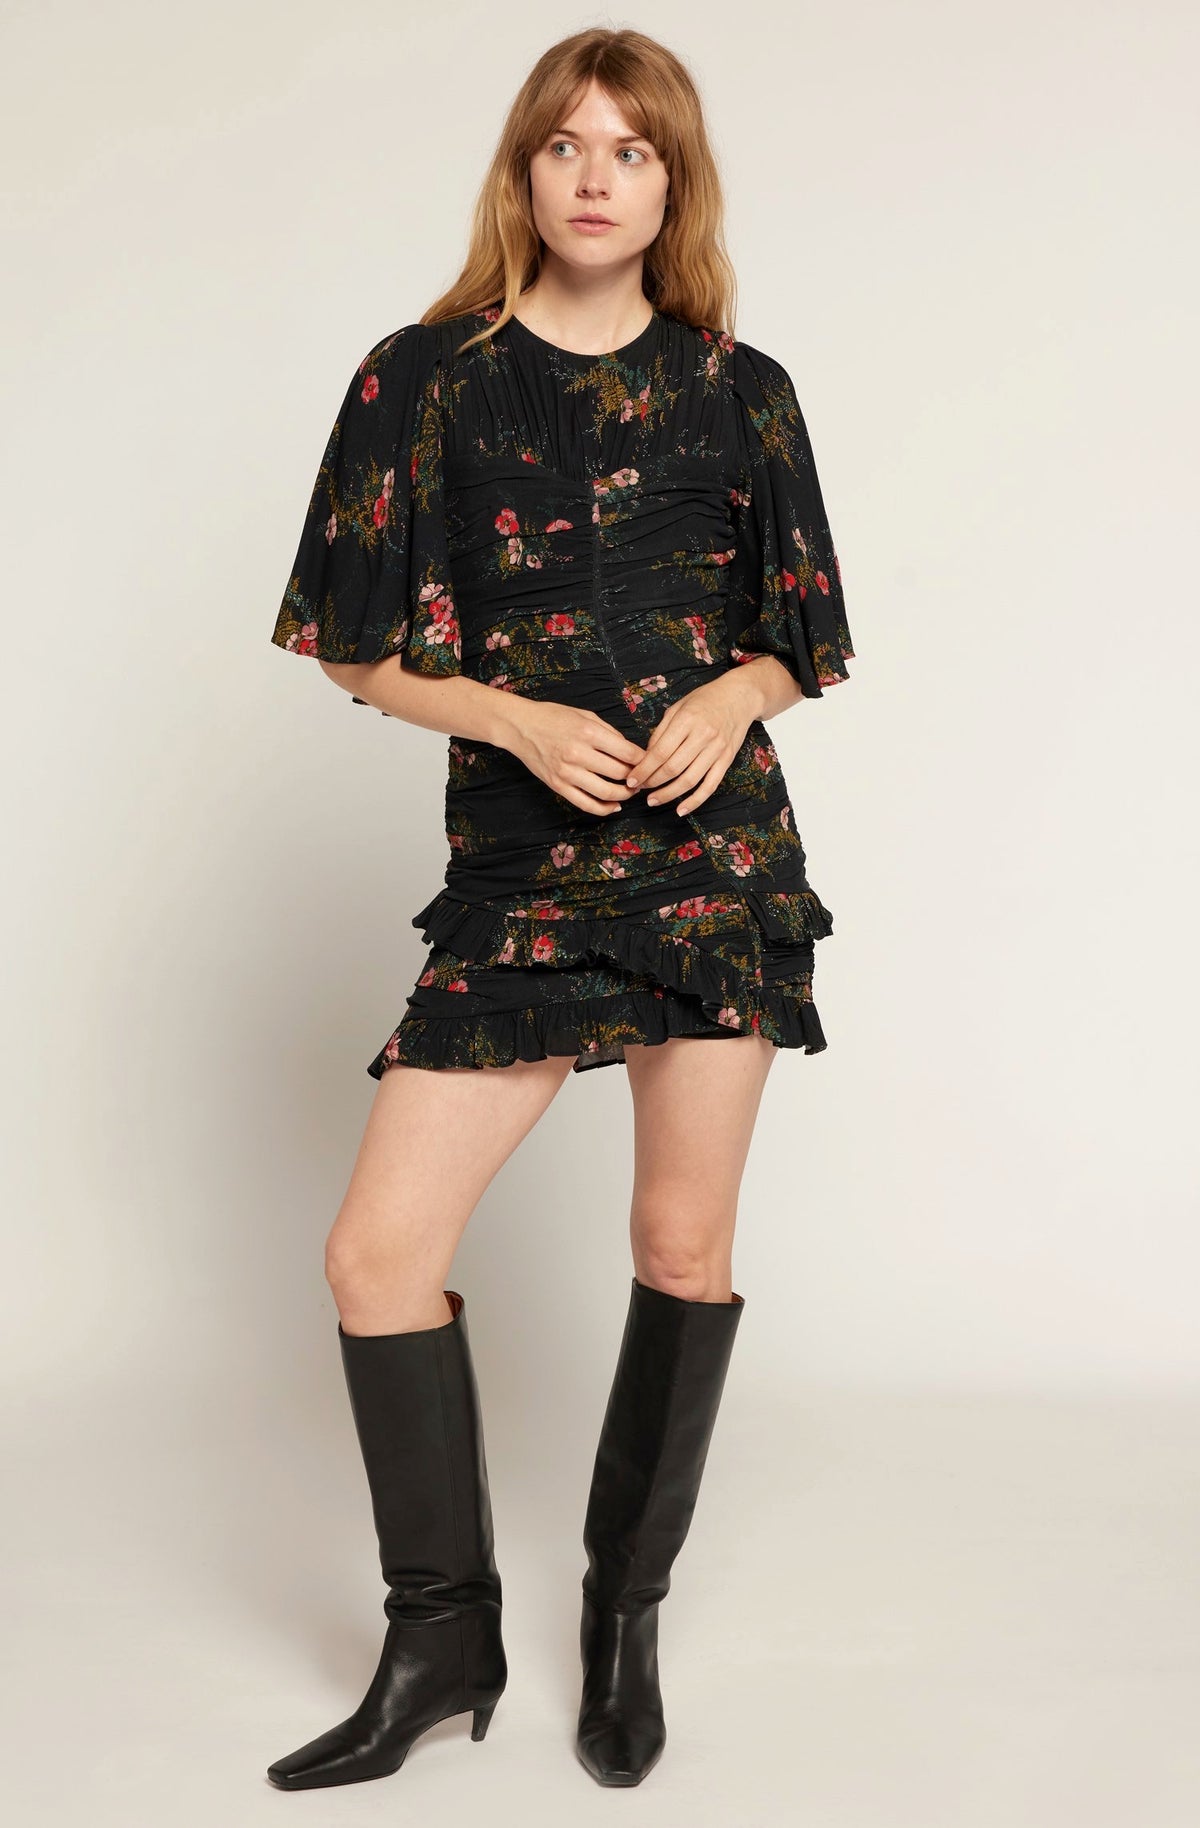 Joie Foster Flounce Sleeve Mini Dress - Size 4 Available